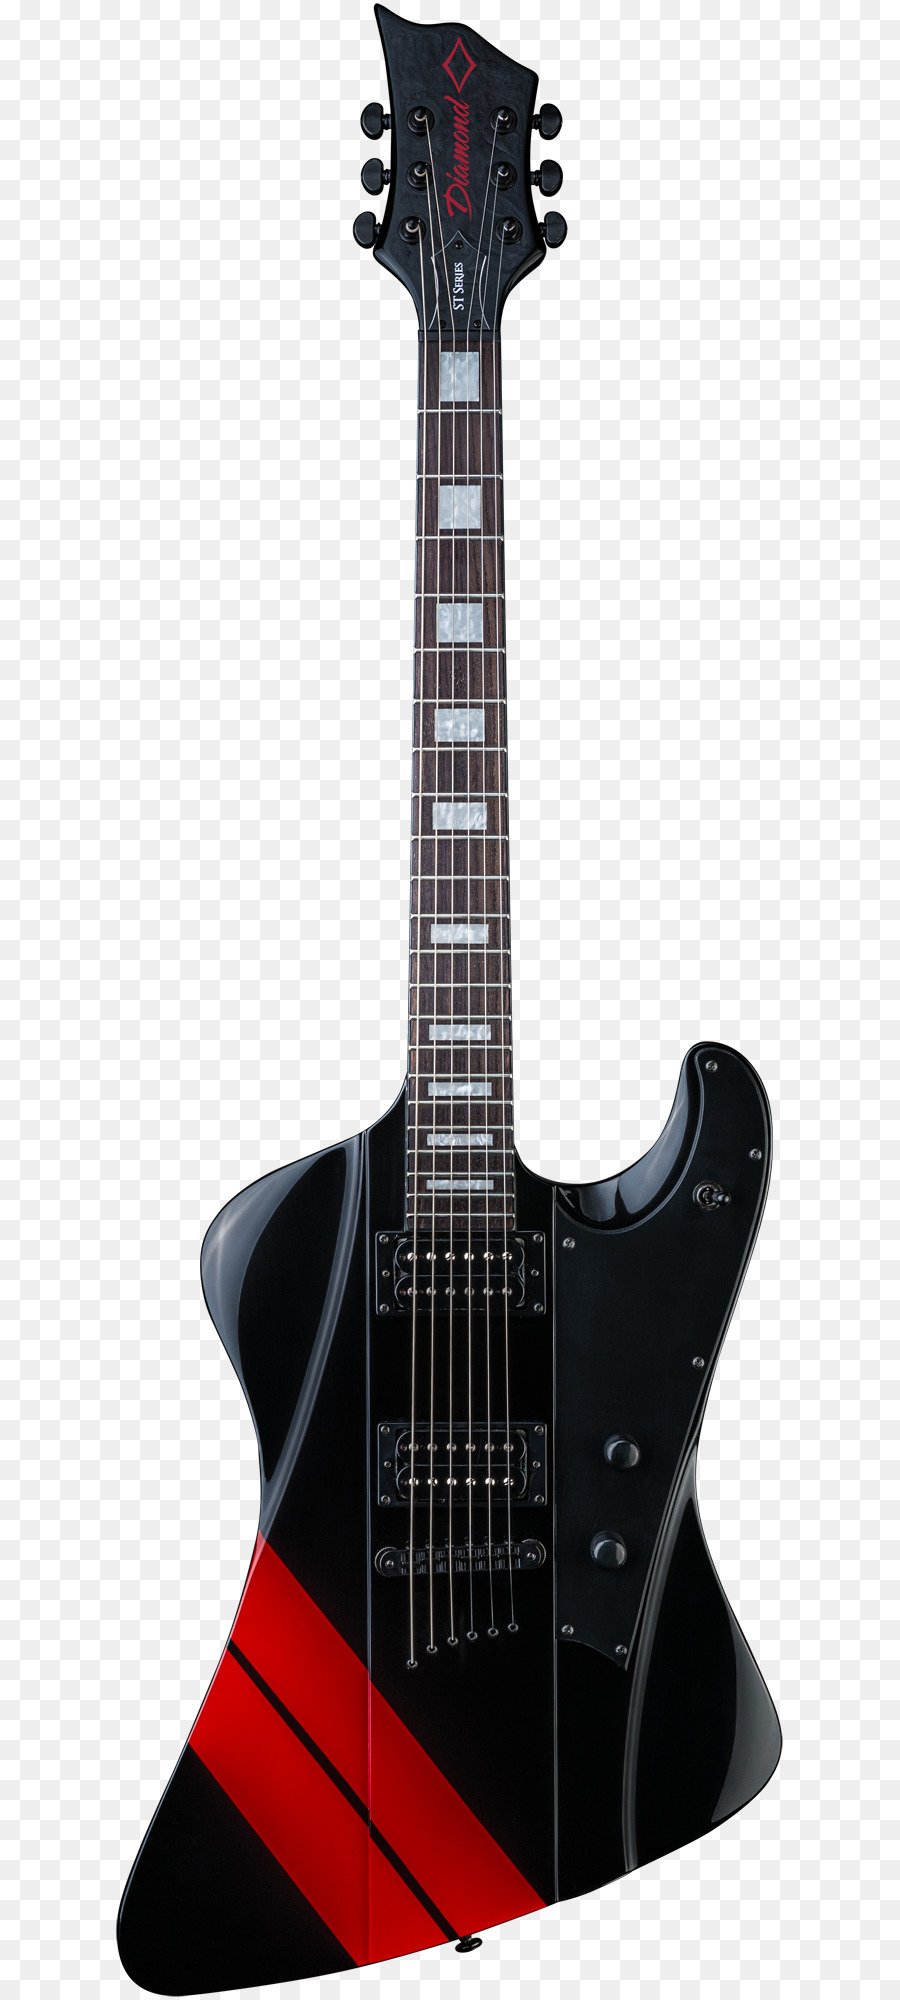 Guitar điện Nhạc Cụ Fender Jaguar guitar Bass - cây guitar